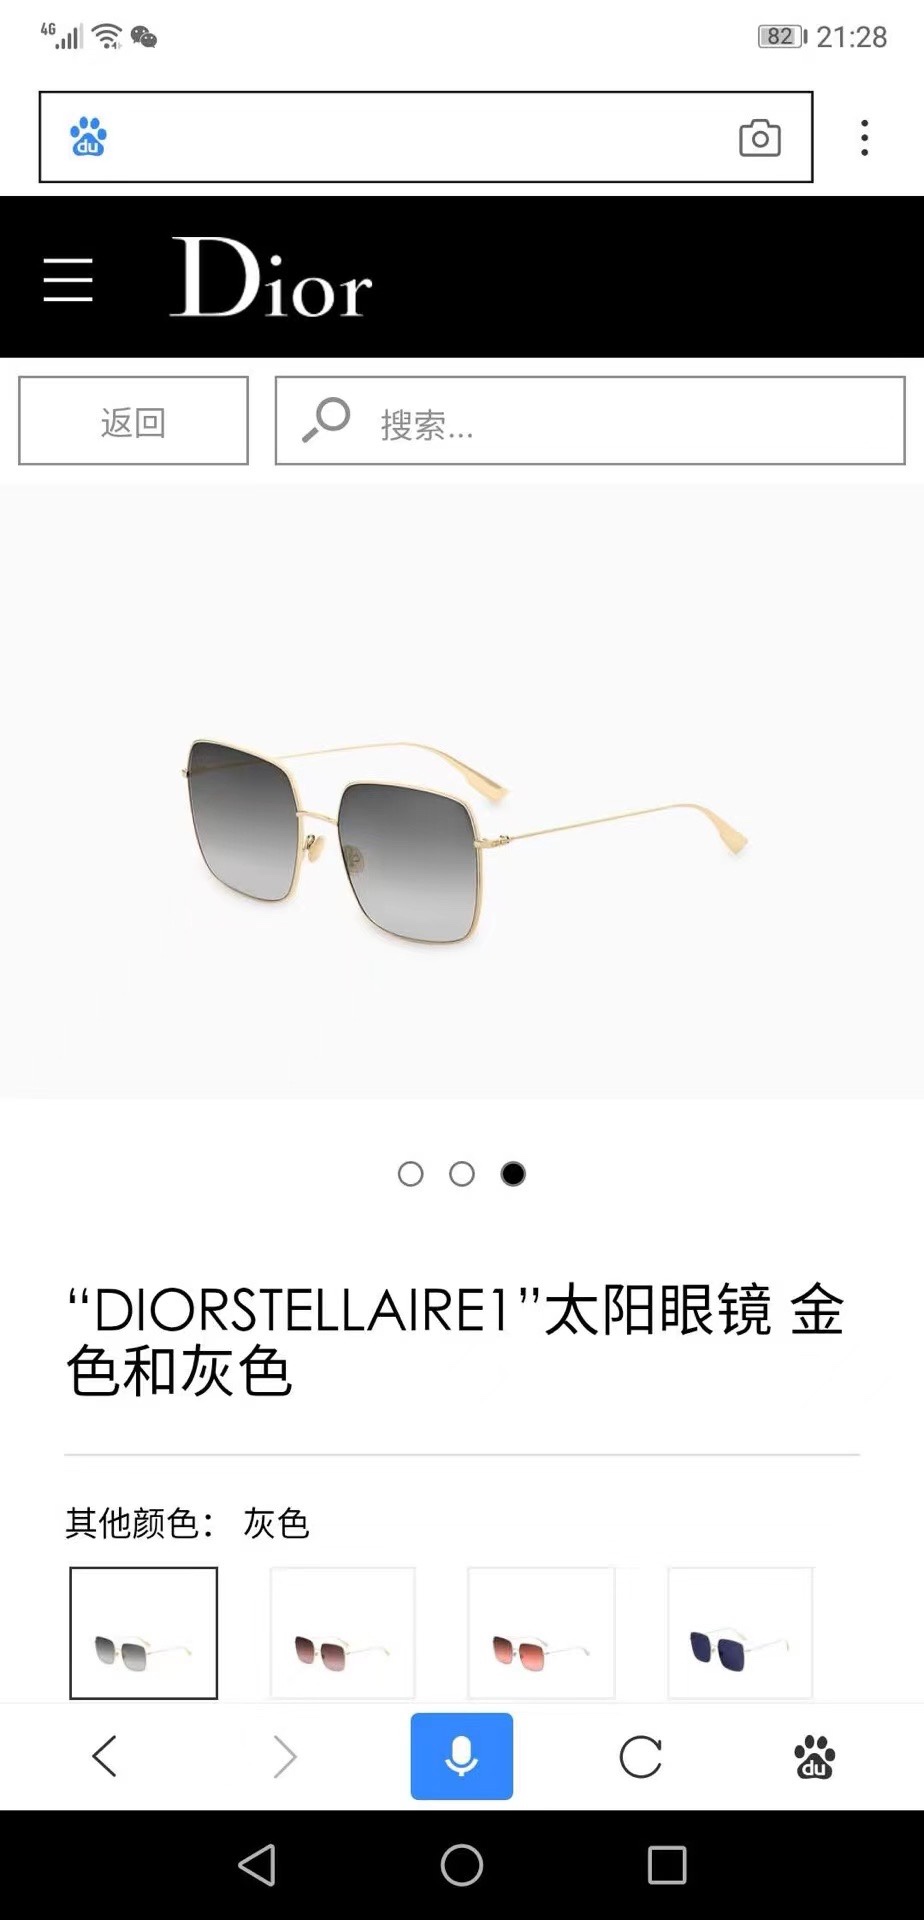 Dior 7 Star
 Sunglasses